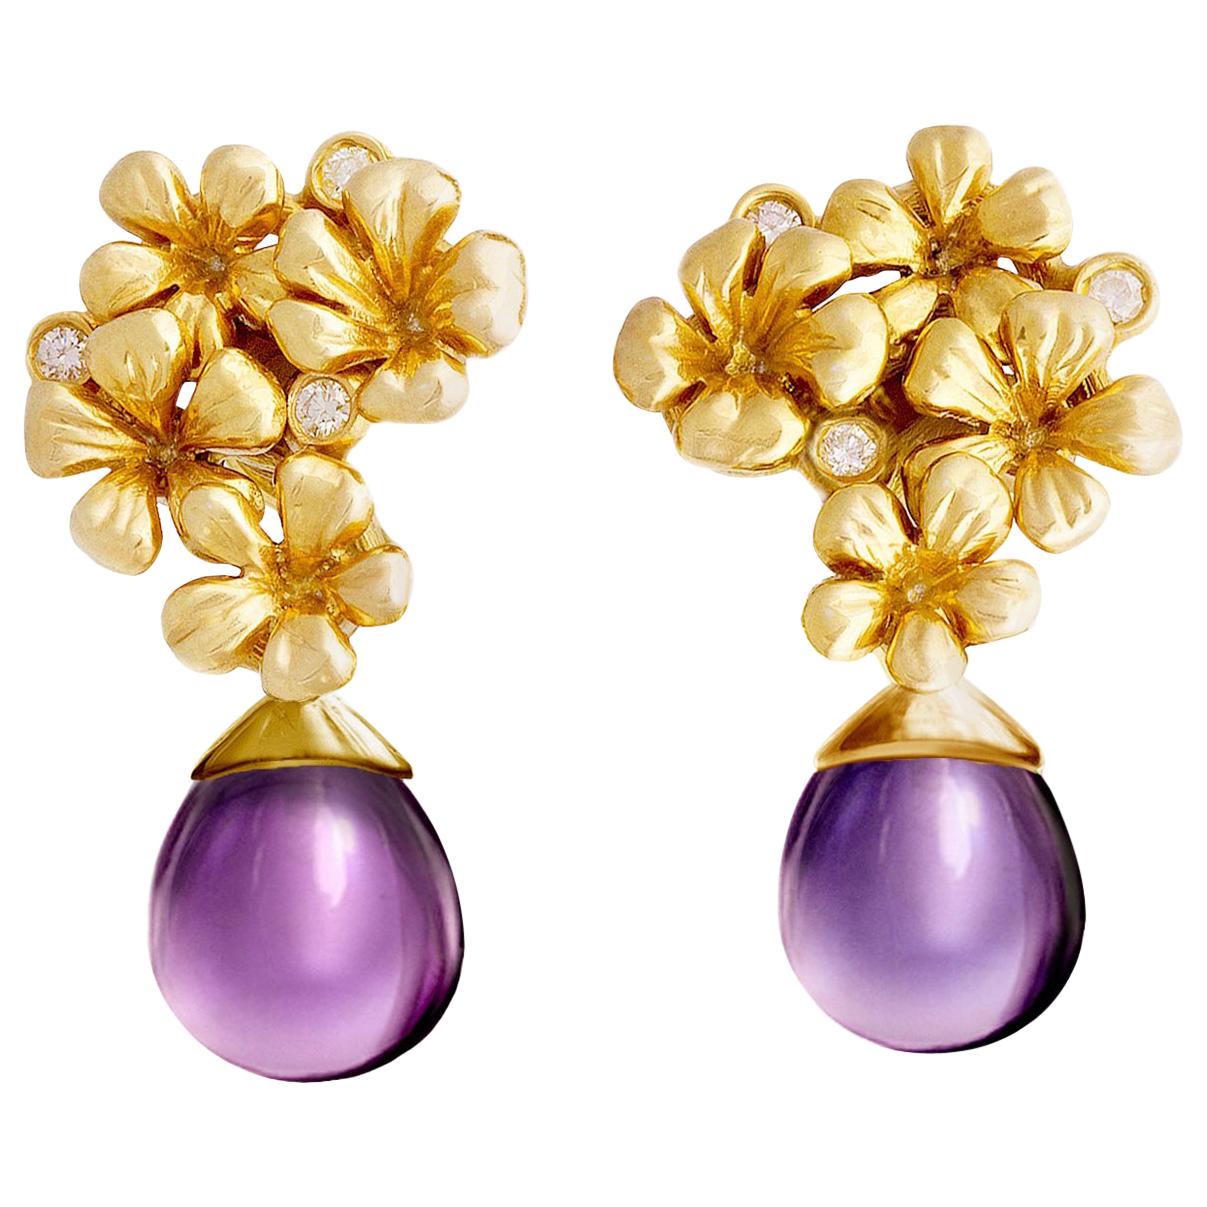 Eighteen Karat Gold Plum Flowers Clip-on Earrings with Diamonds and Amethyst